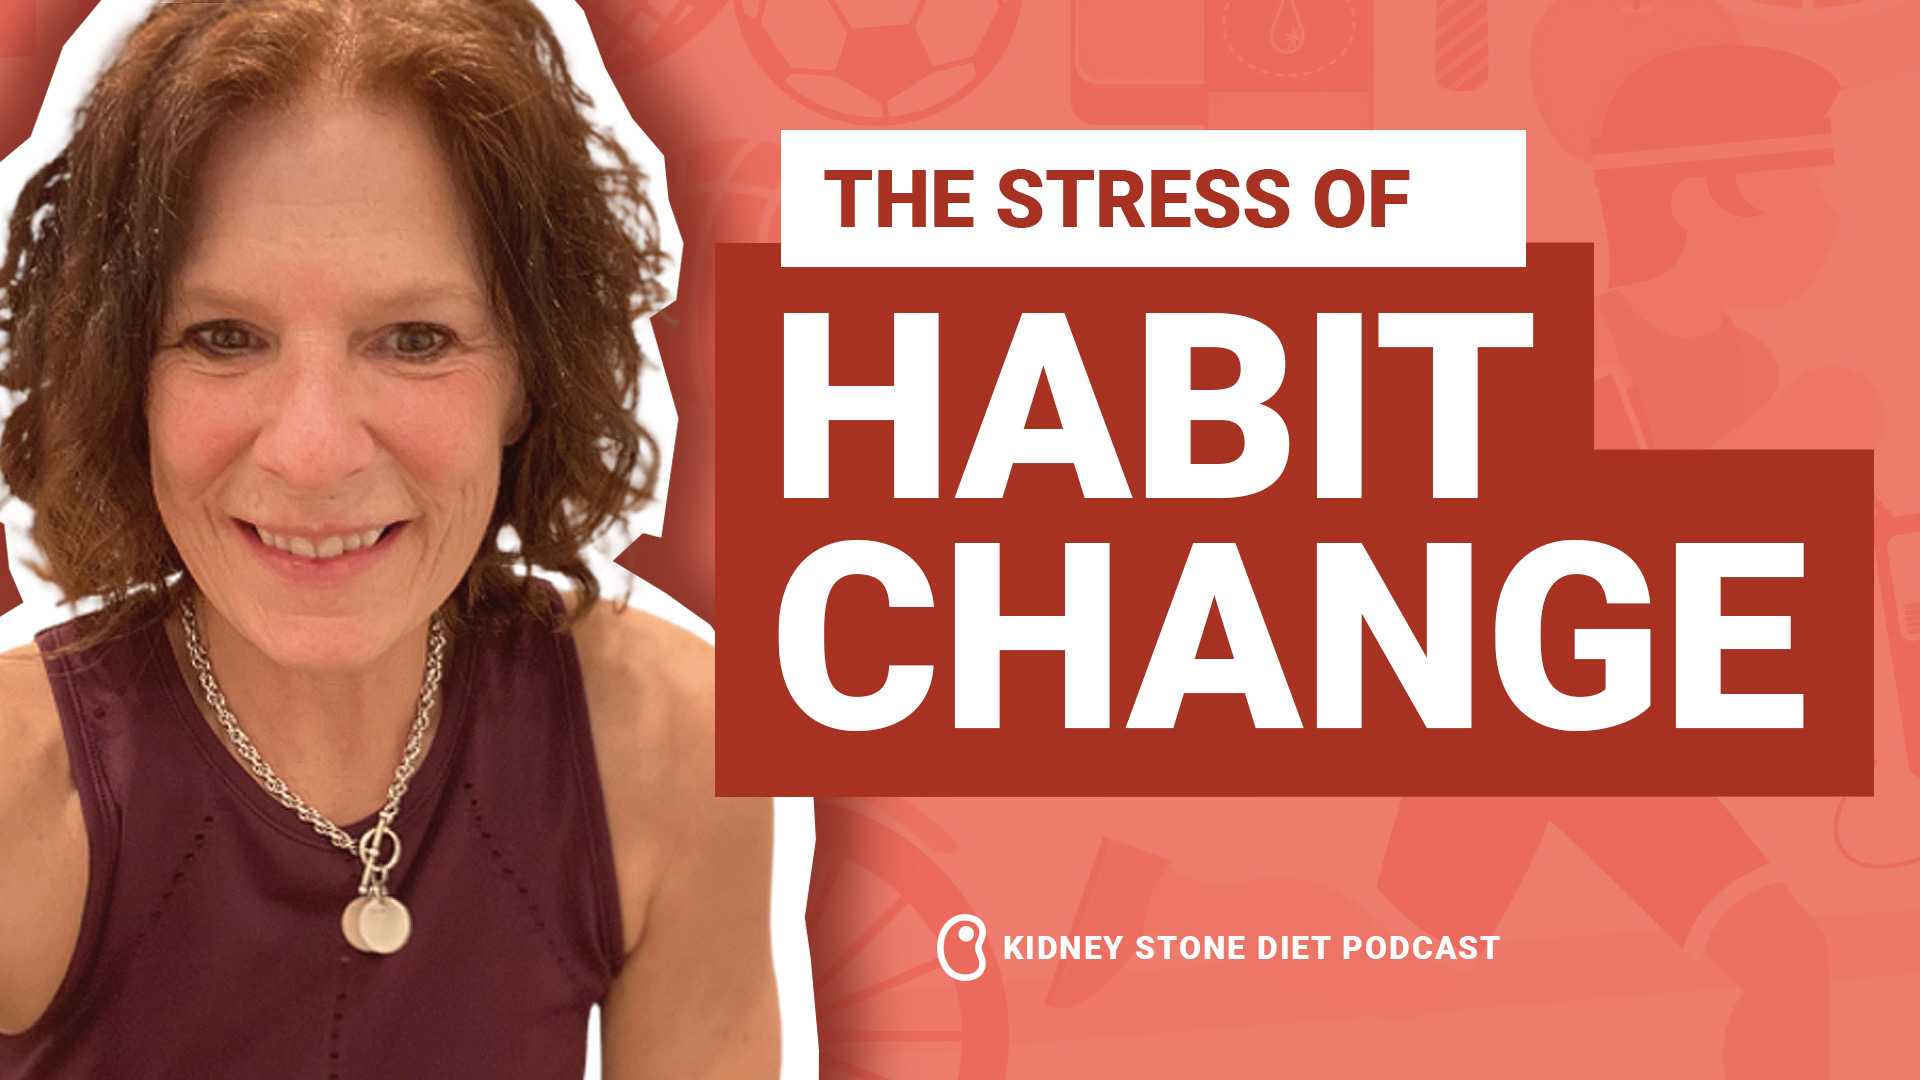 The stress of habit change